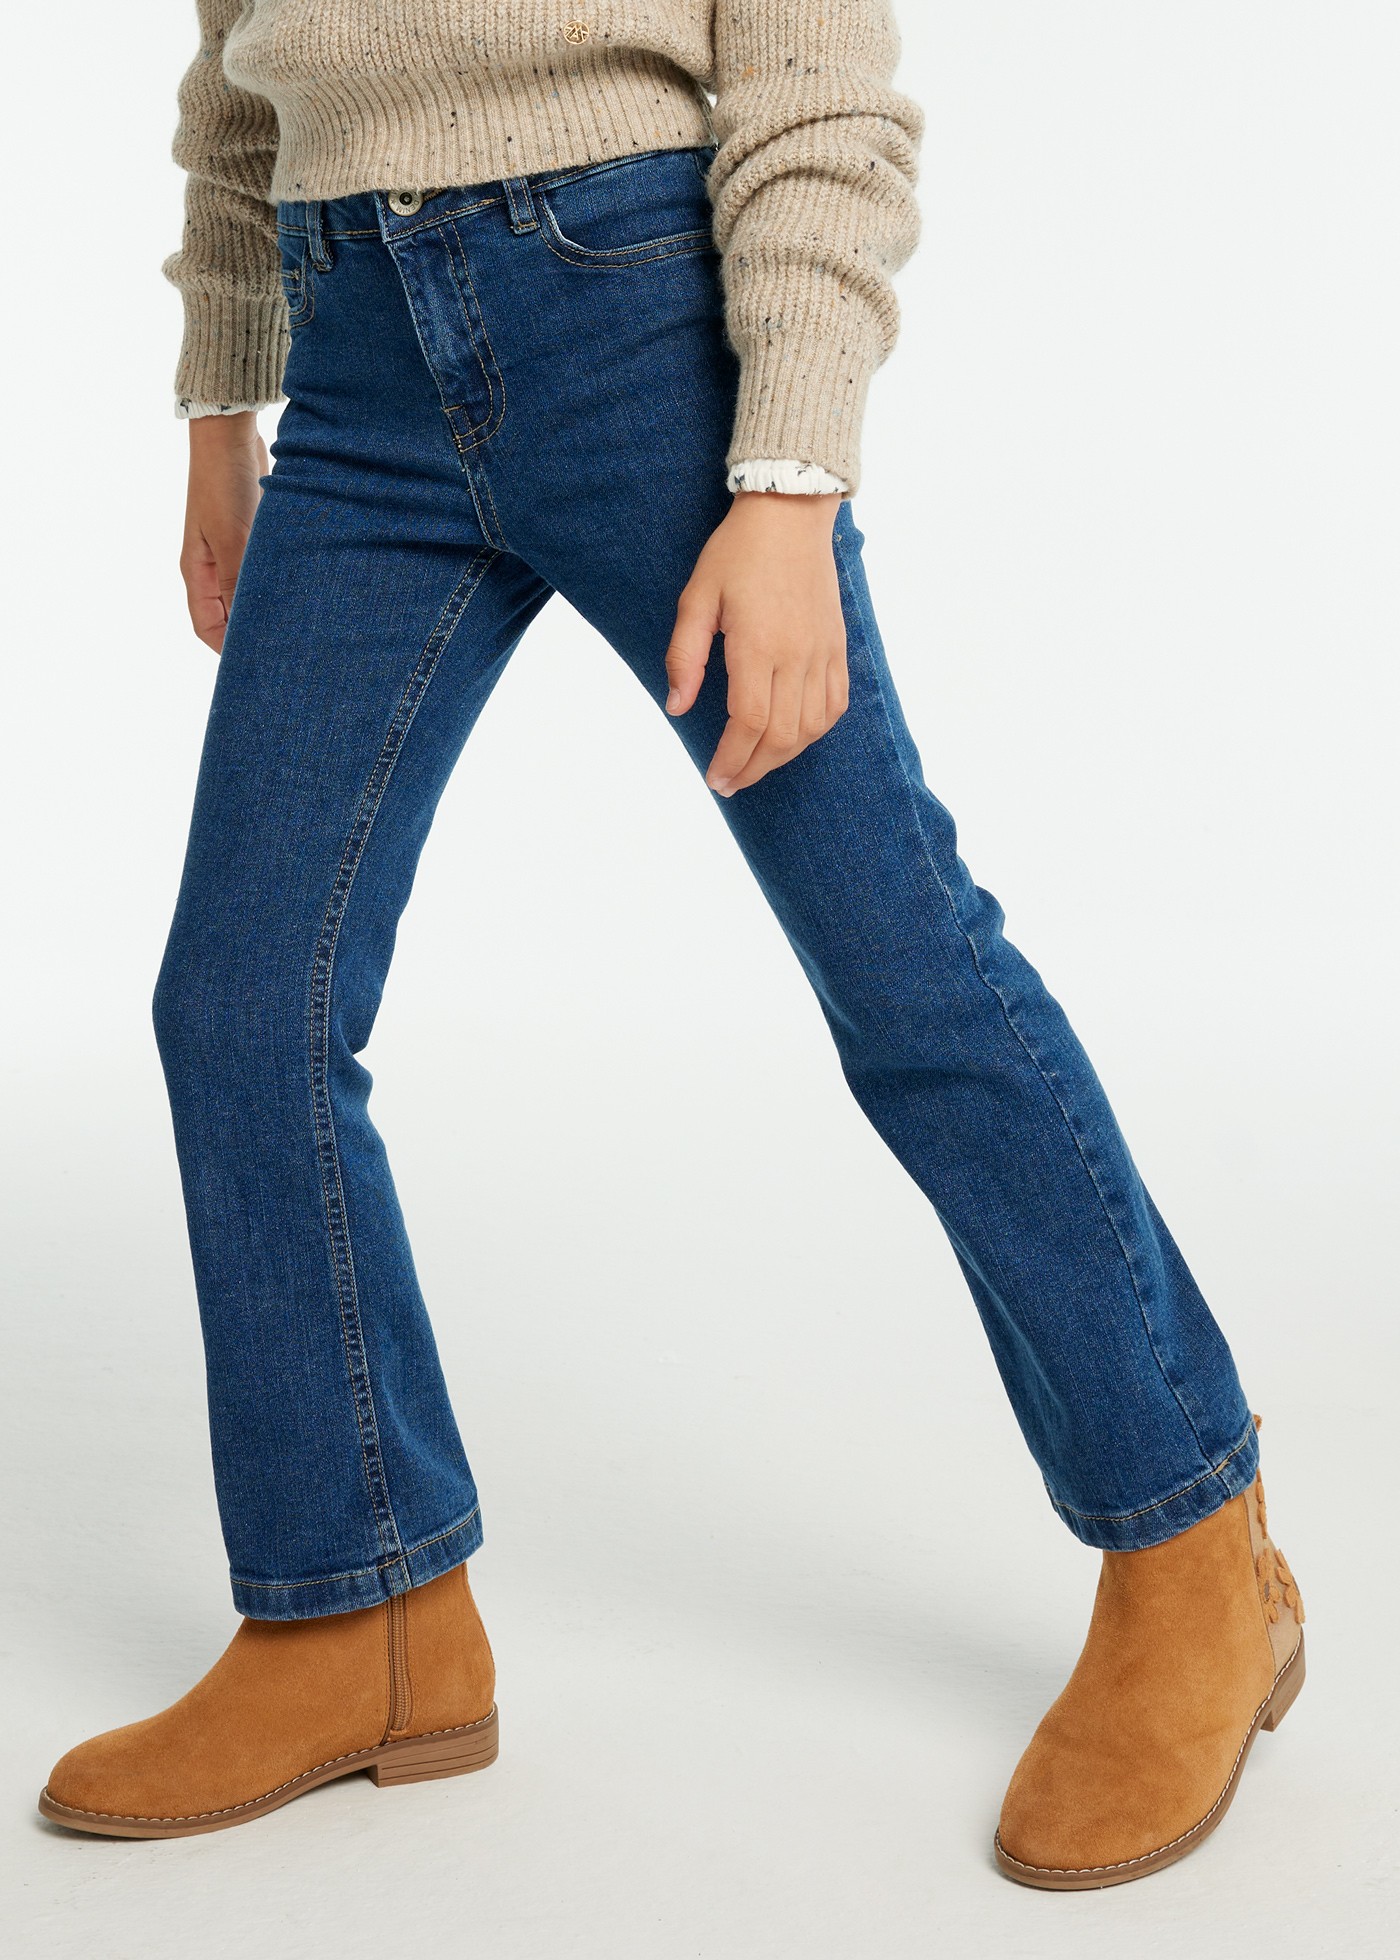 Basic flare jeans for girls